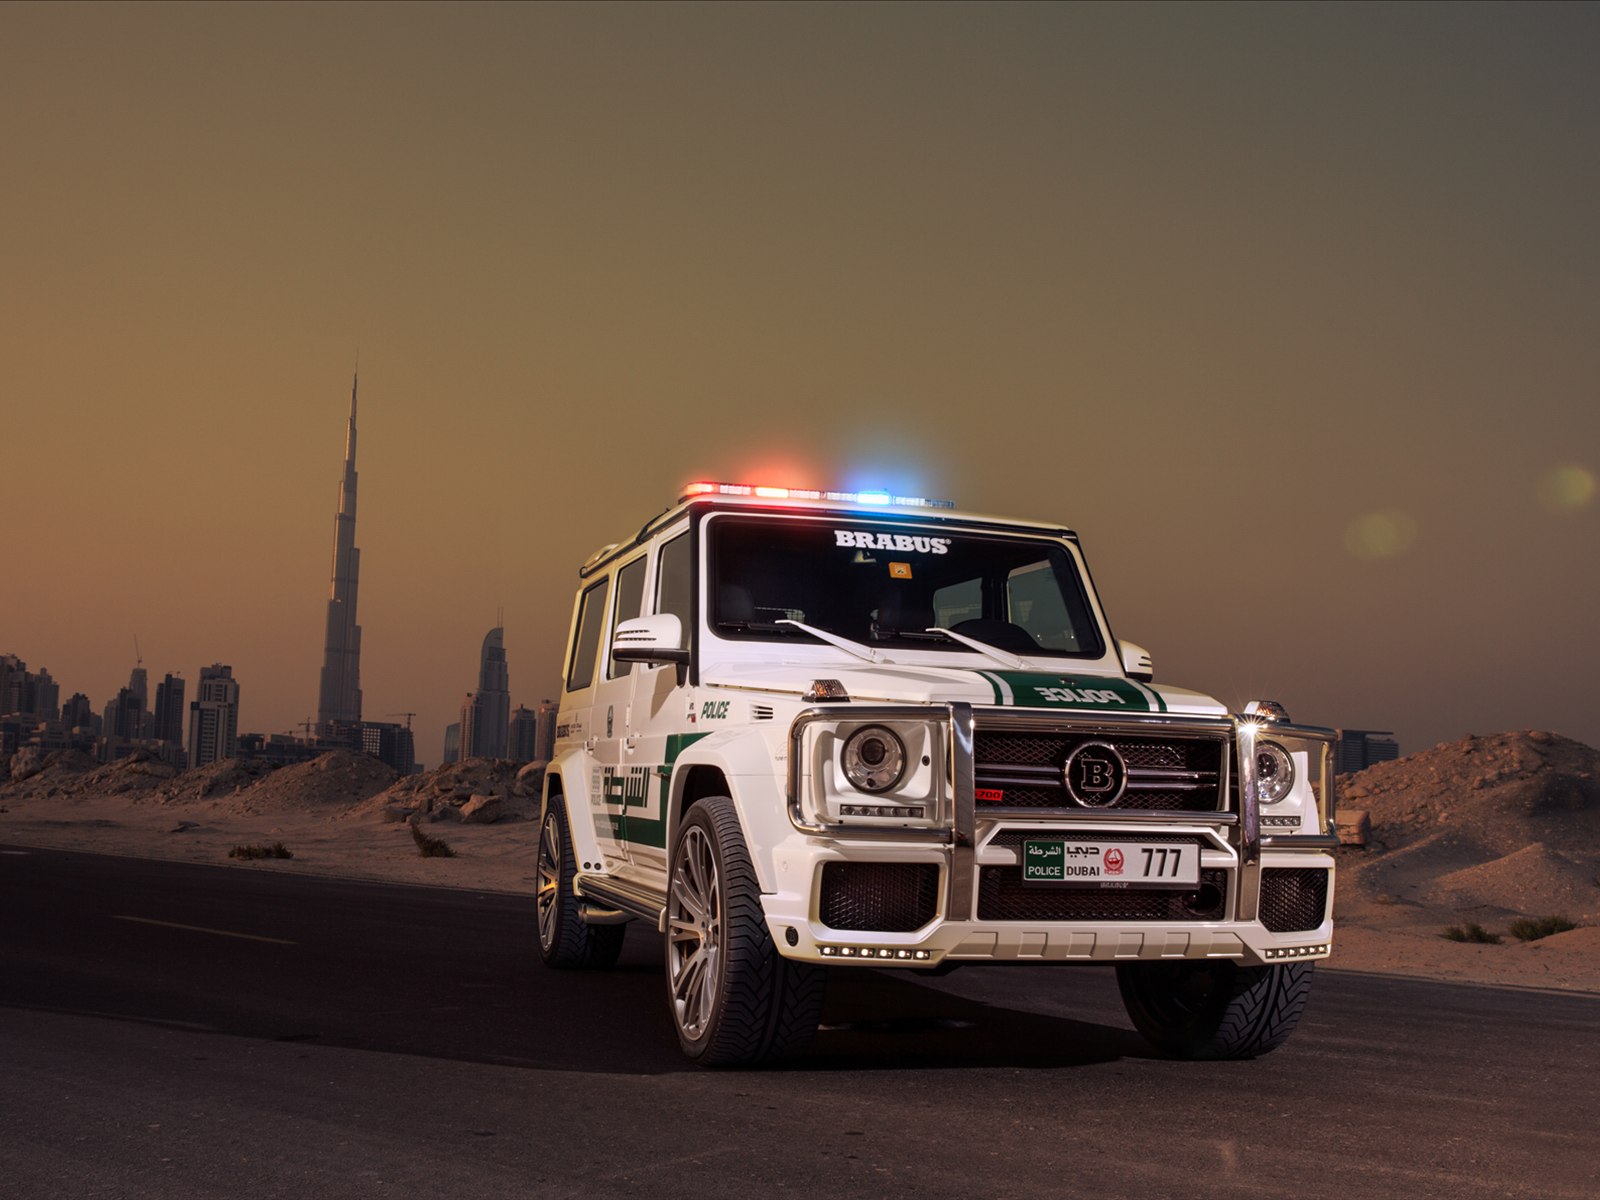 Brabus B63s-700 Widestar Dubai Police Car - Dubai Police Cars Wallpaper Hd - HD Wallpaper 